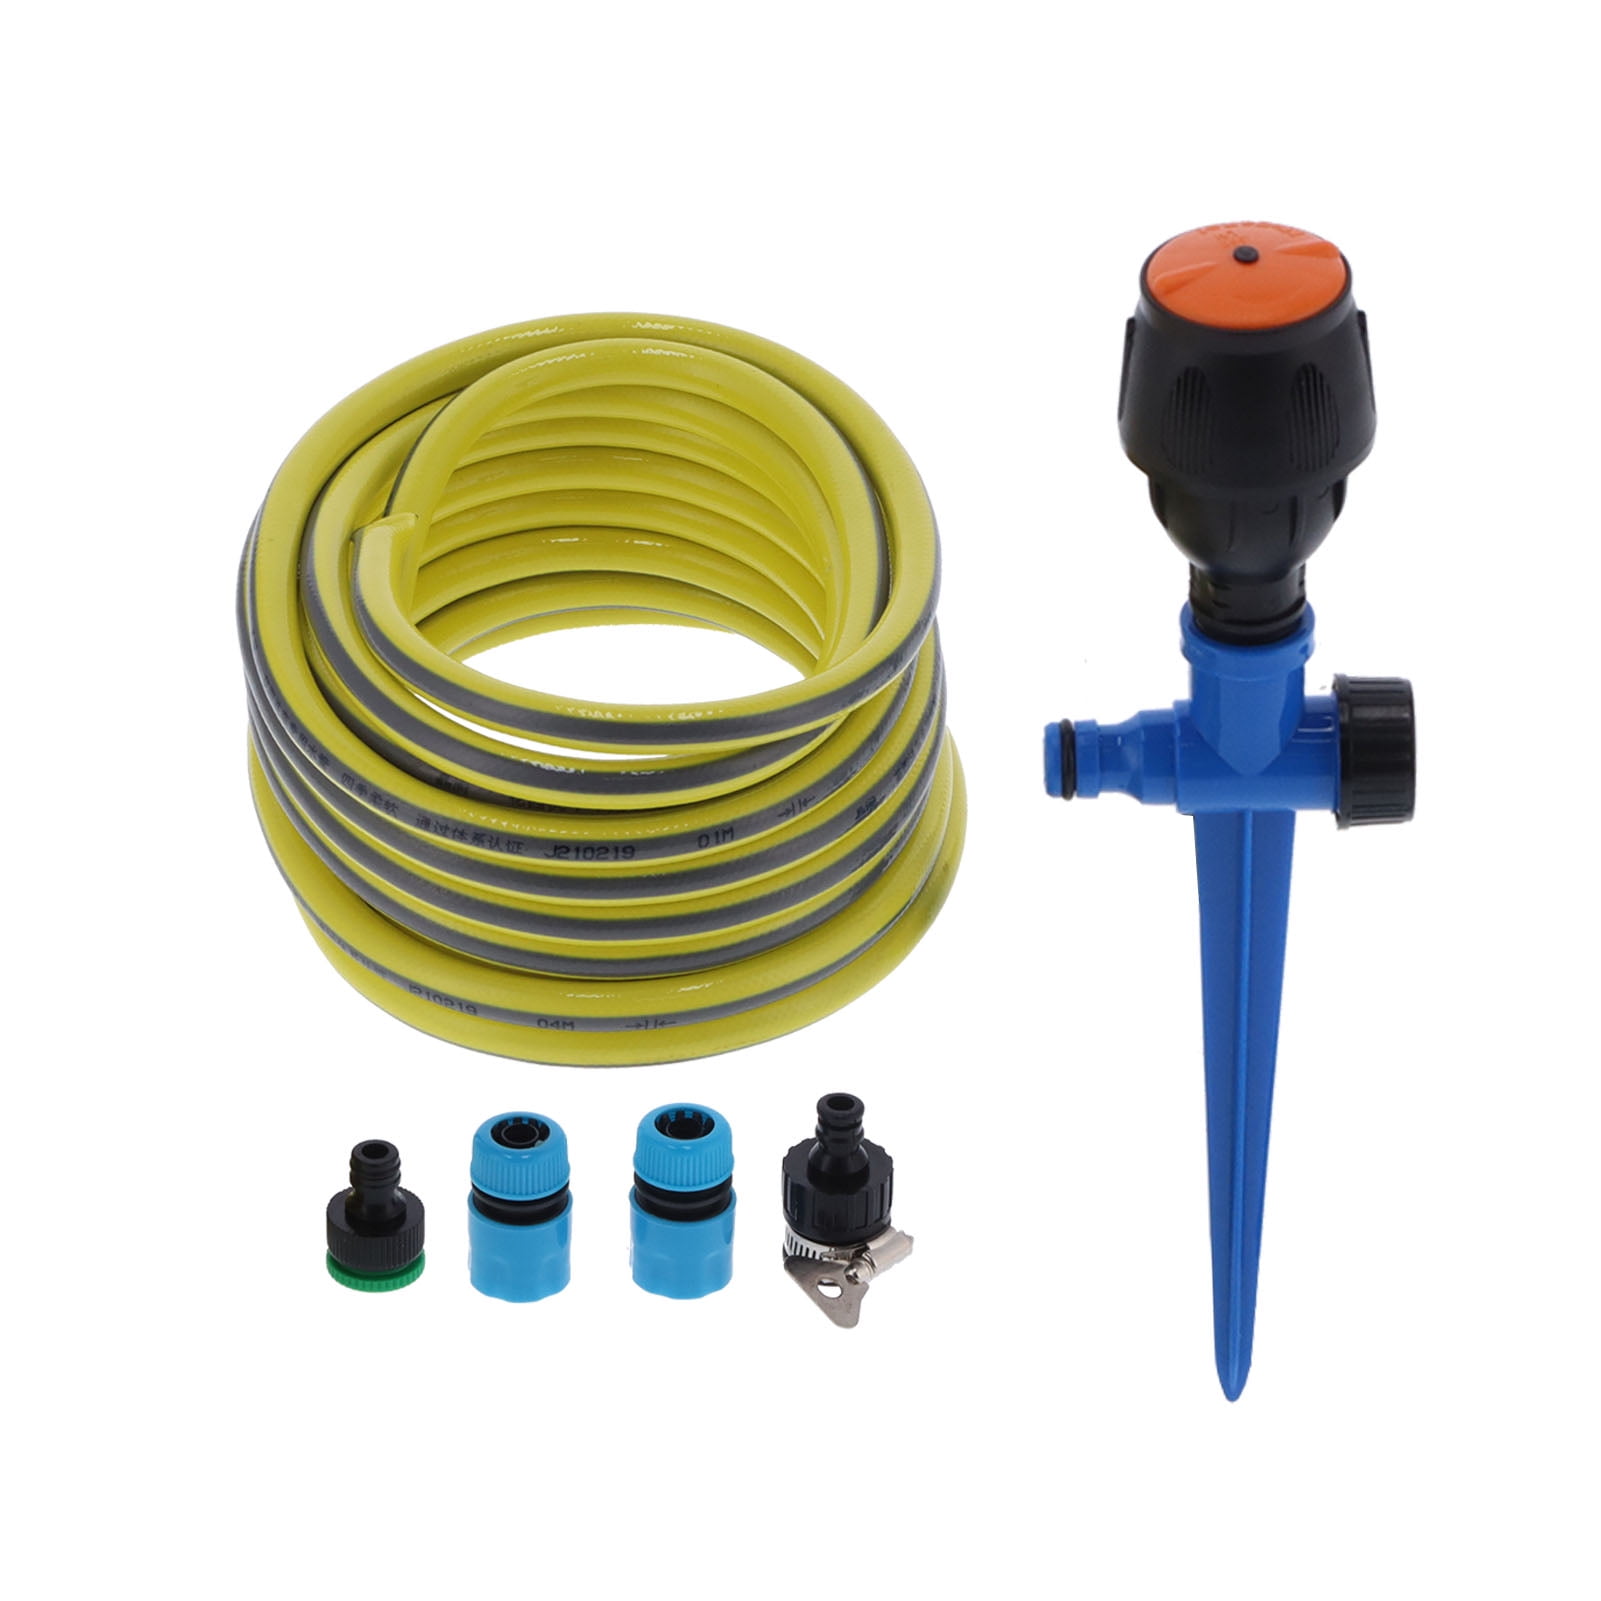 Renewed Orbit 50020 In-Ground Blu-Lock Tubing System and Digital Hose Faucet Timer Blue Black 1-Zone Sprinkler Kit